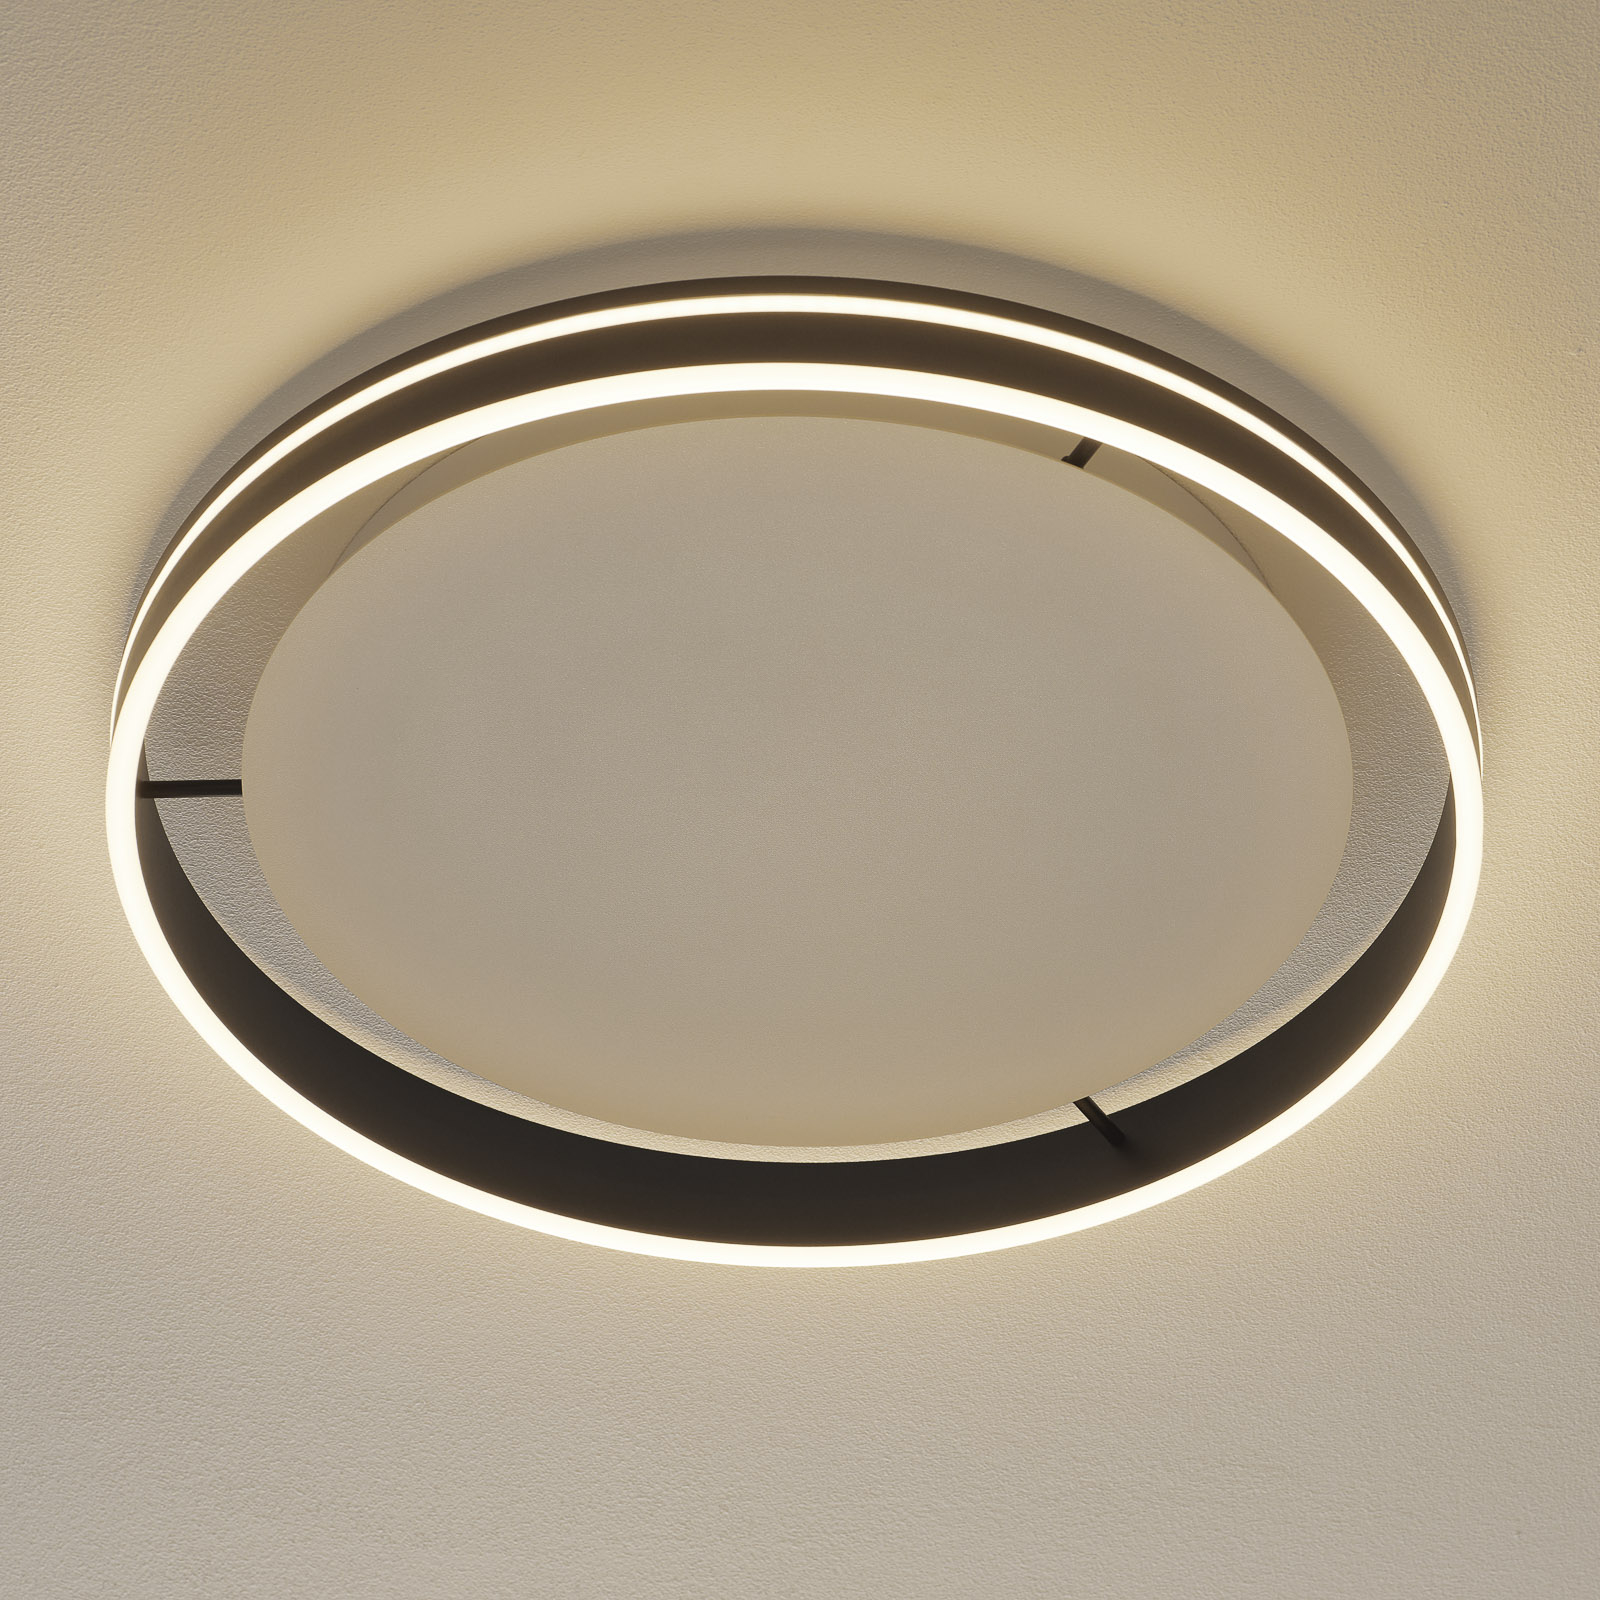 Paul Neuhaus Q-VITO LED plafondlamp 59cm antraciet